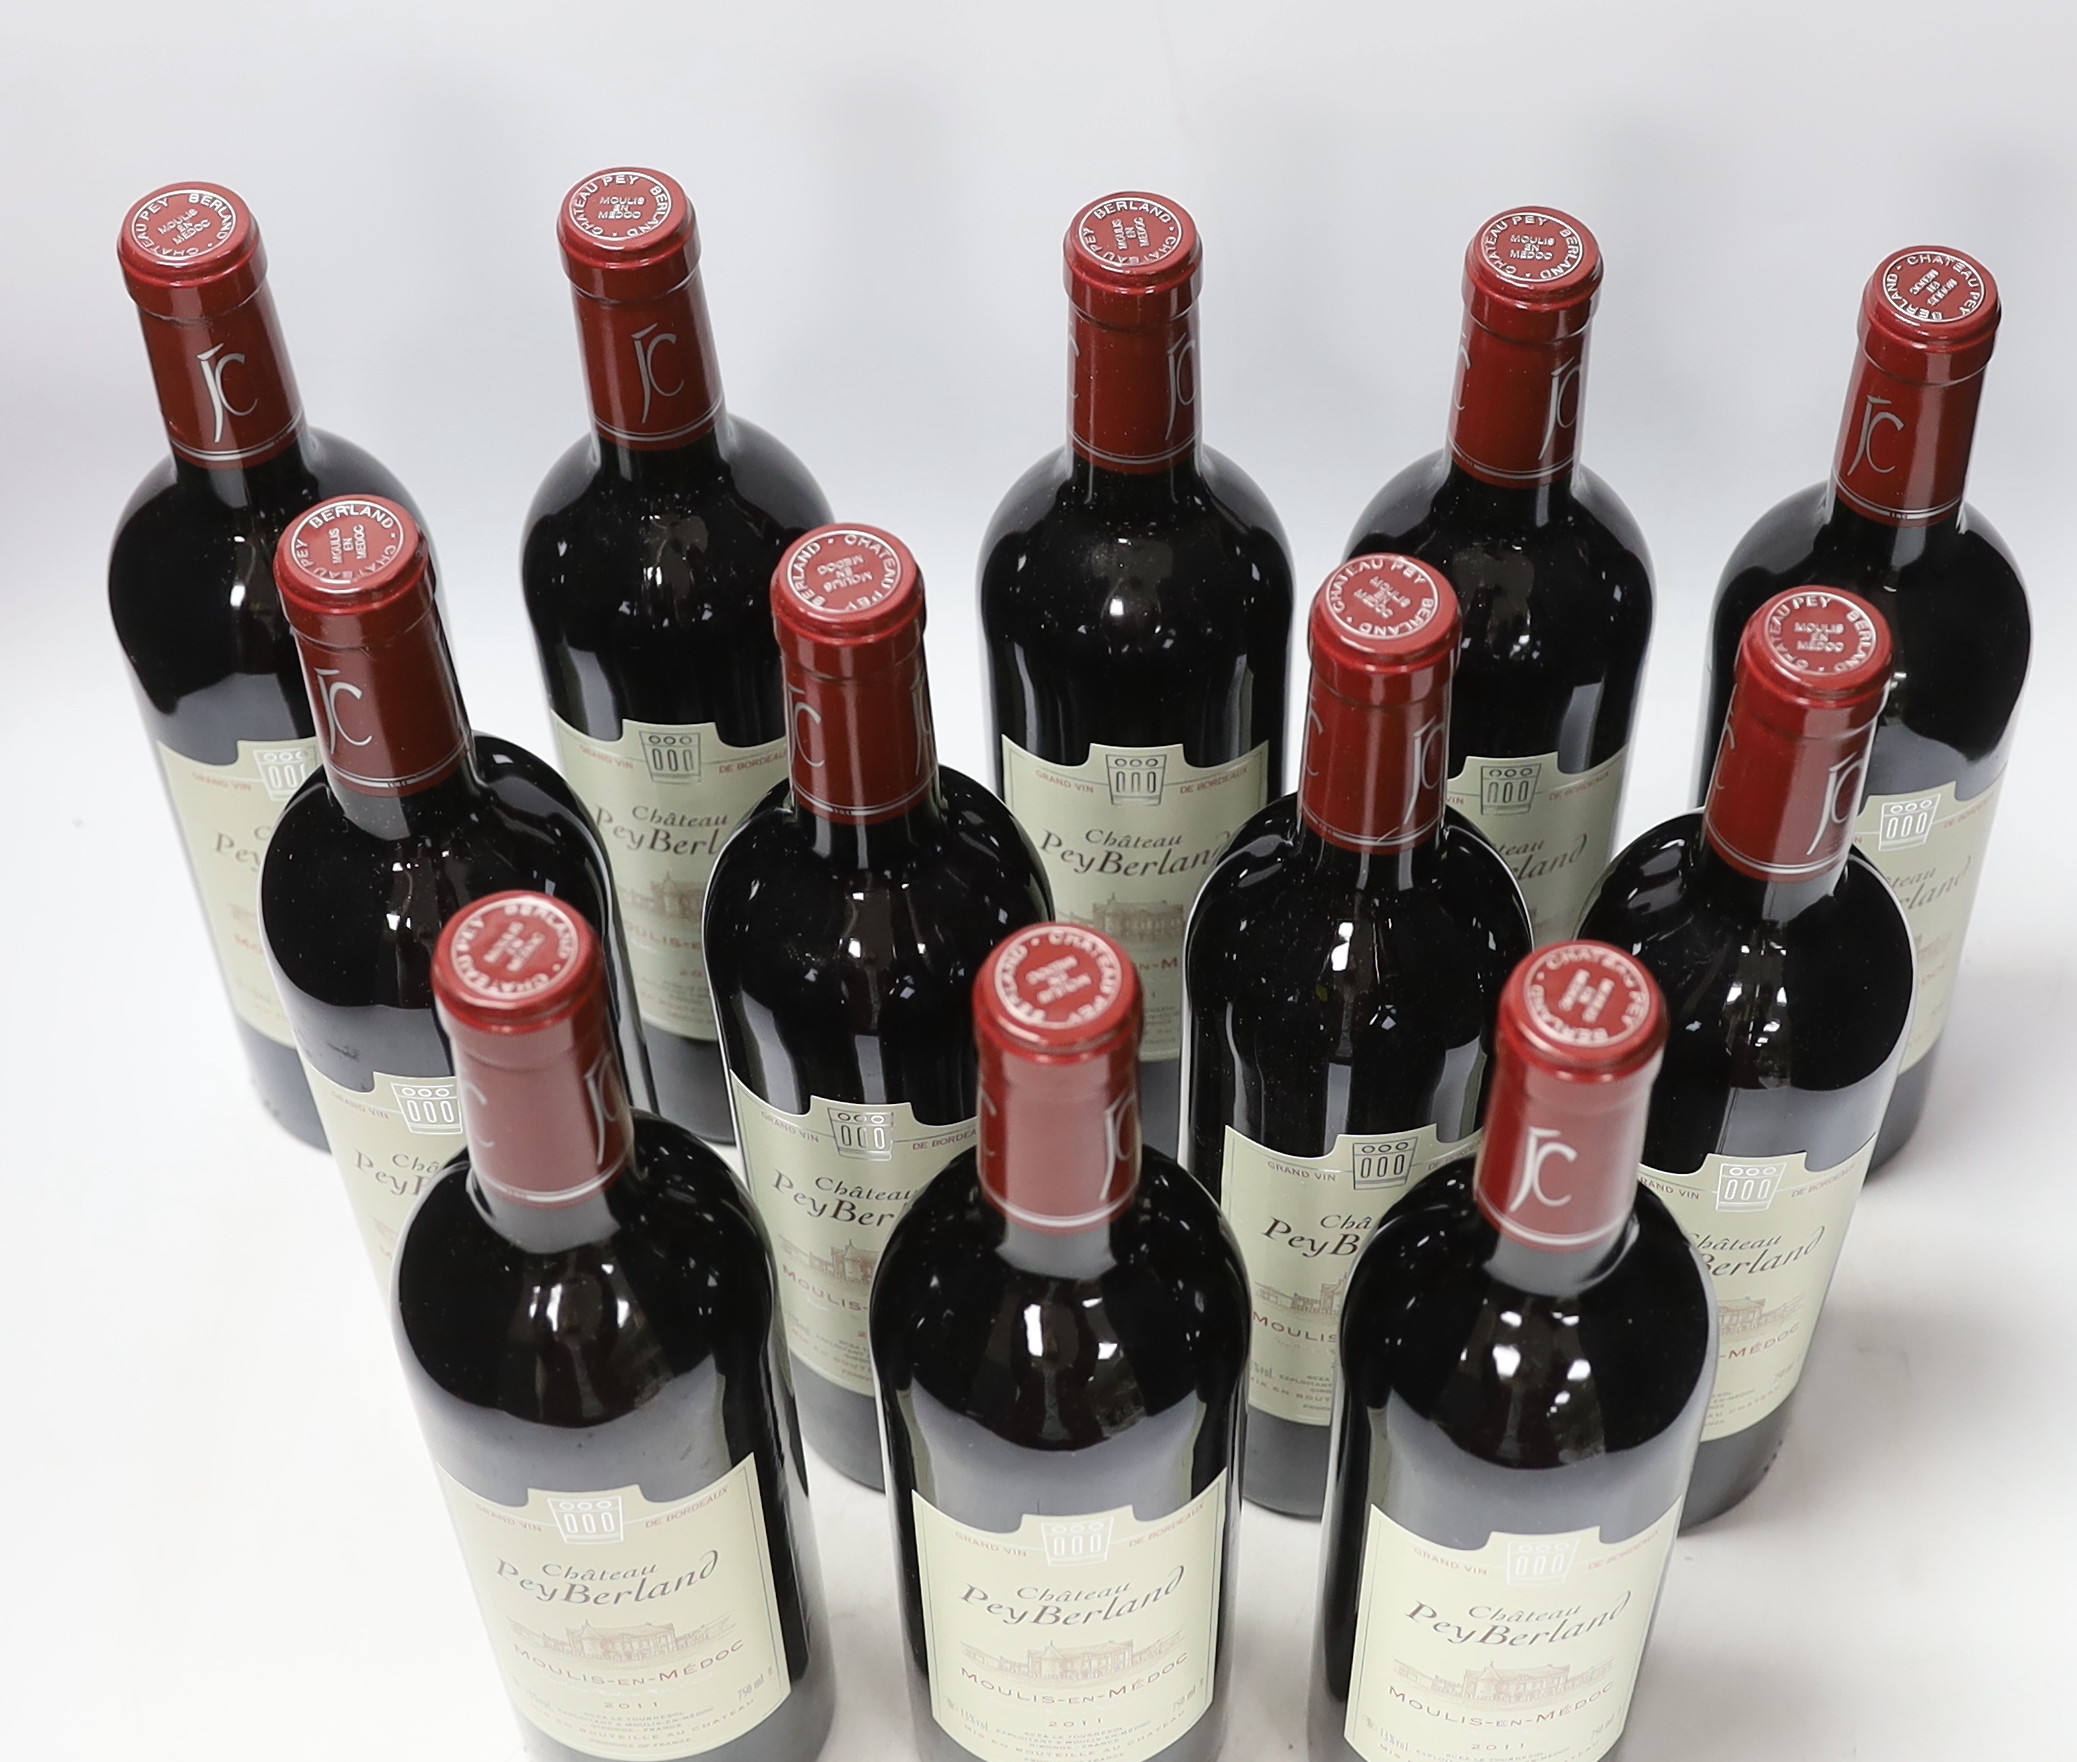 Twelve bottles of Chateau Peyberland Moulis 2011